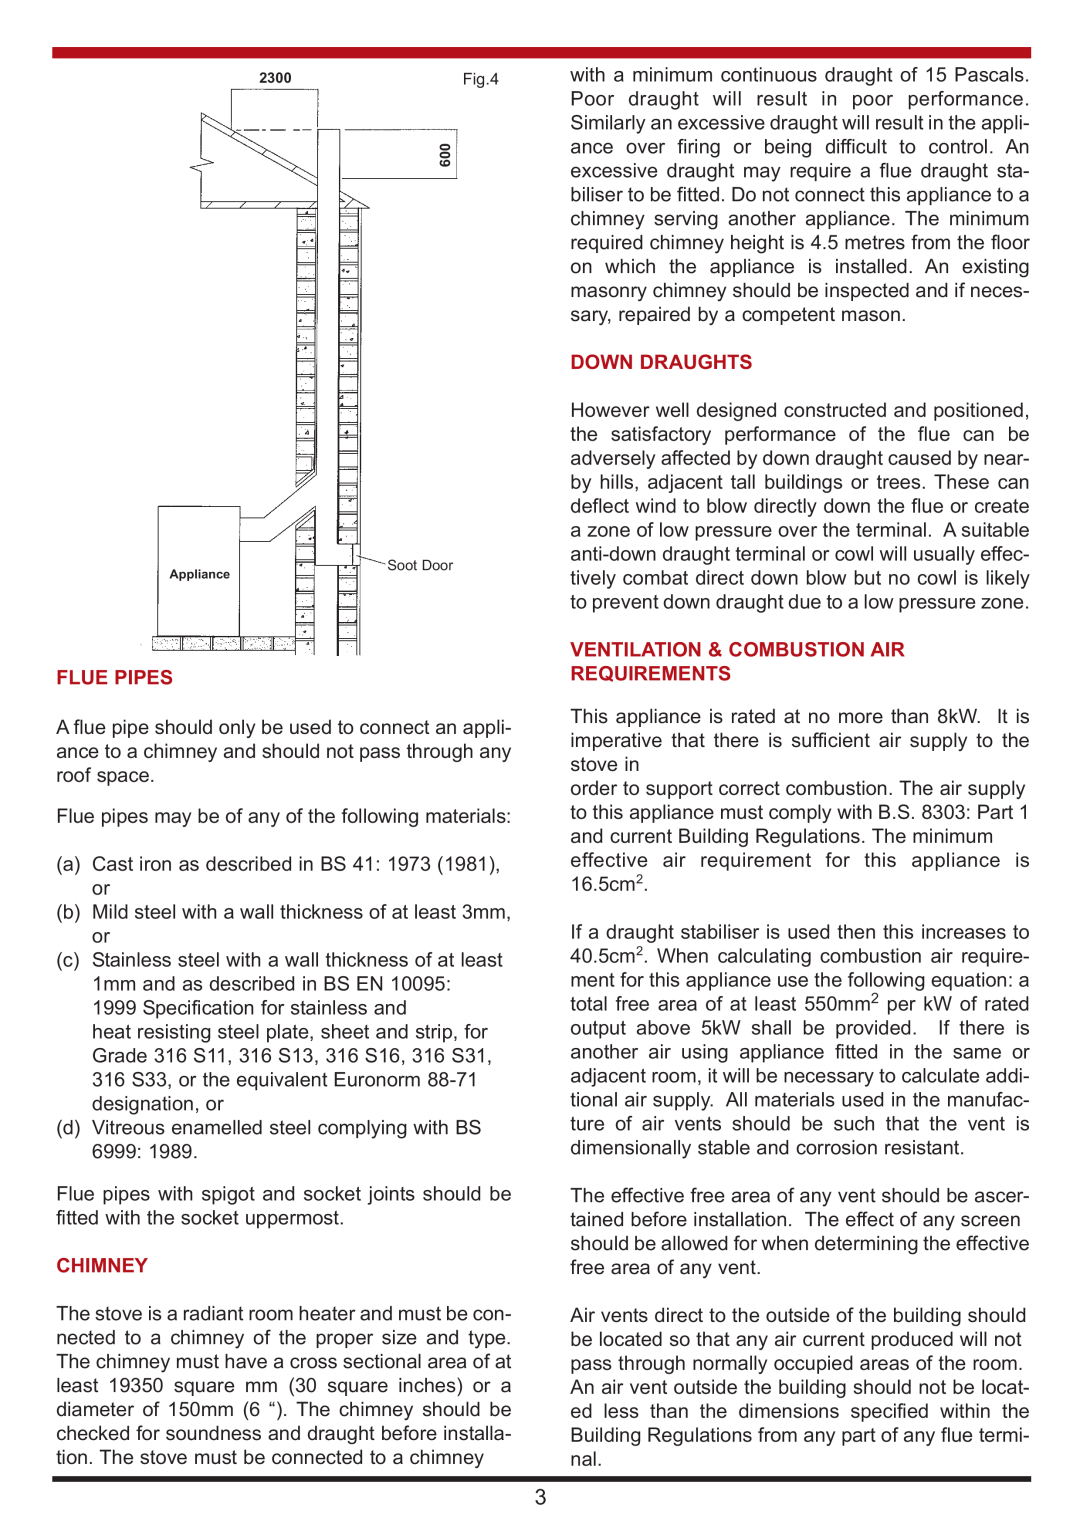 Aga Ranges Berrington manual Flue Pipes, Down Draughts, Ventilation & Combustion Air Requirements, Chimney 